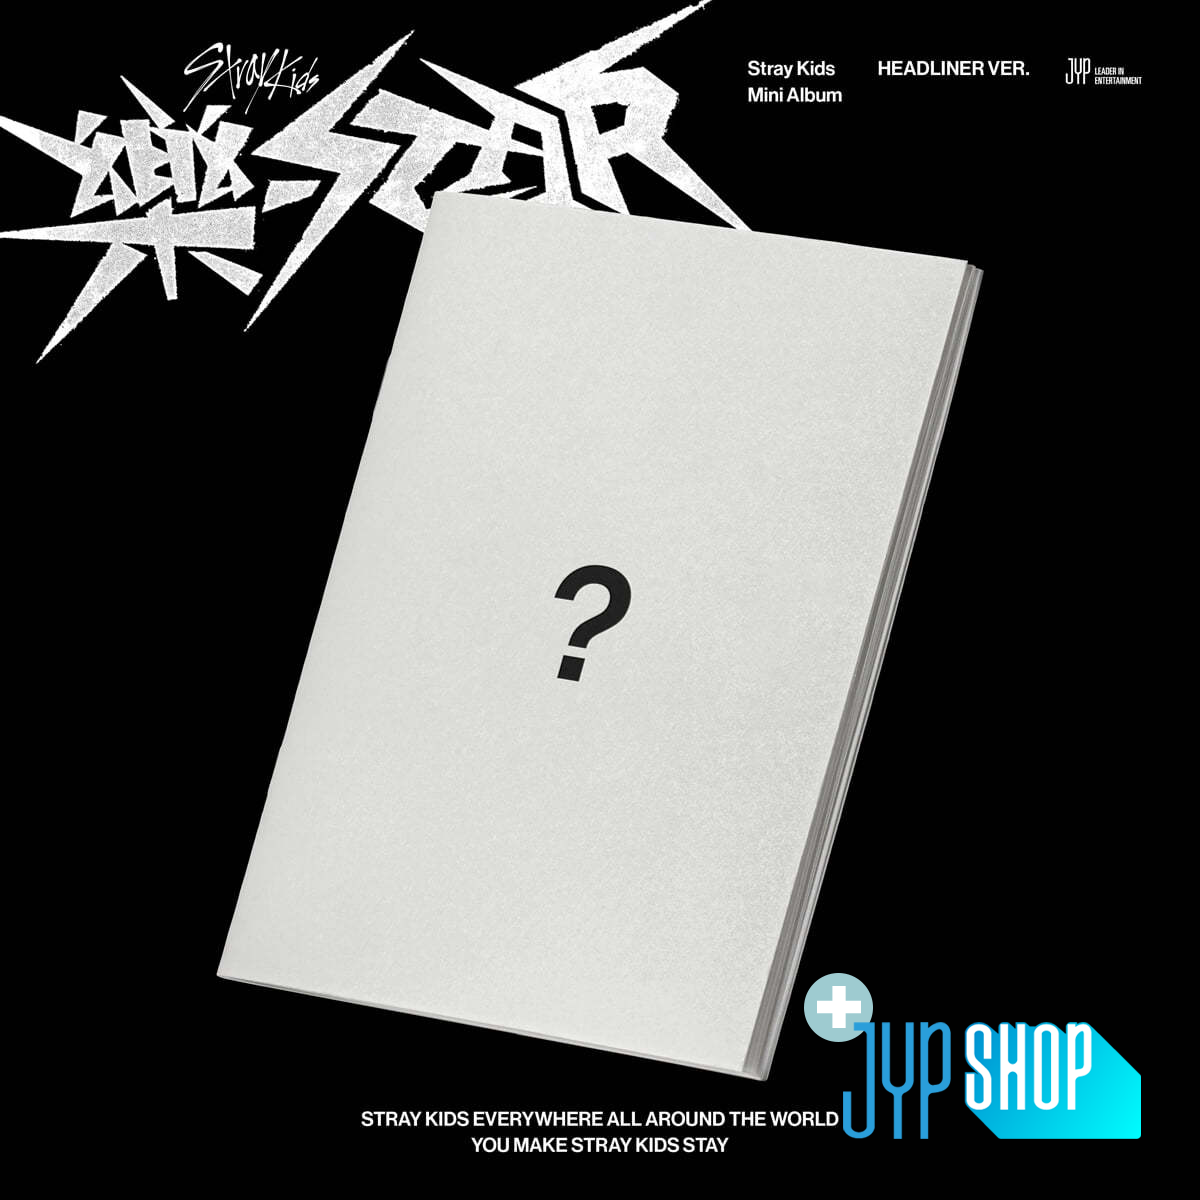 Stray Kids - 樂-STAR (ROCK-STAR) (HEADLINER ver.) + JYP SHOP P.O.B [PRE-ORDER]